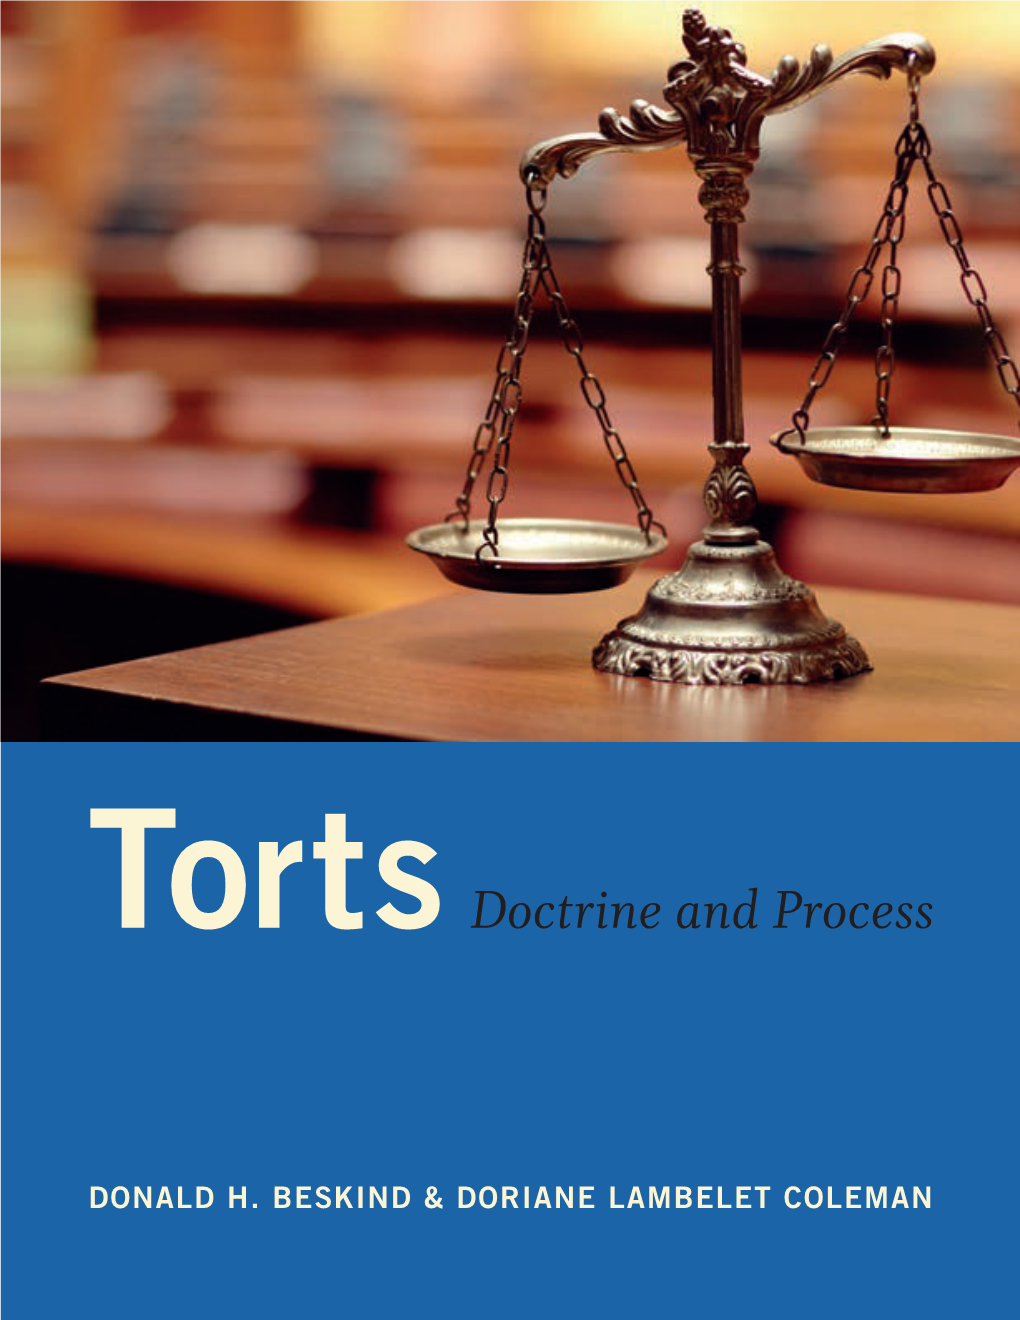 Tortsdoctrine and Process